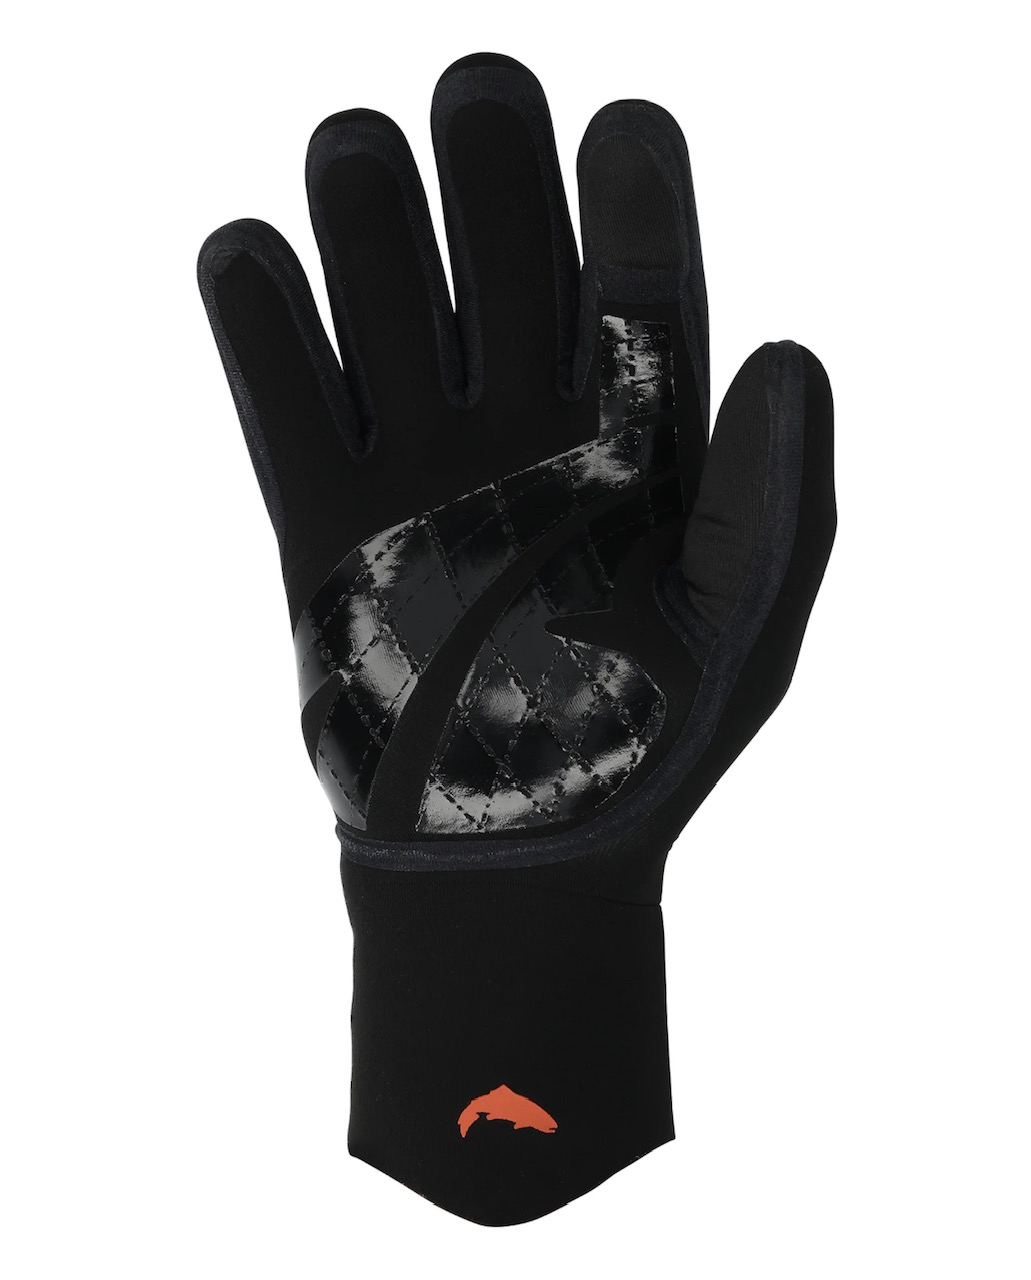 Simms ExStream Neoprene Glove - Black - Medium